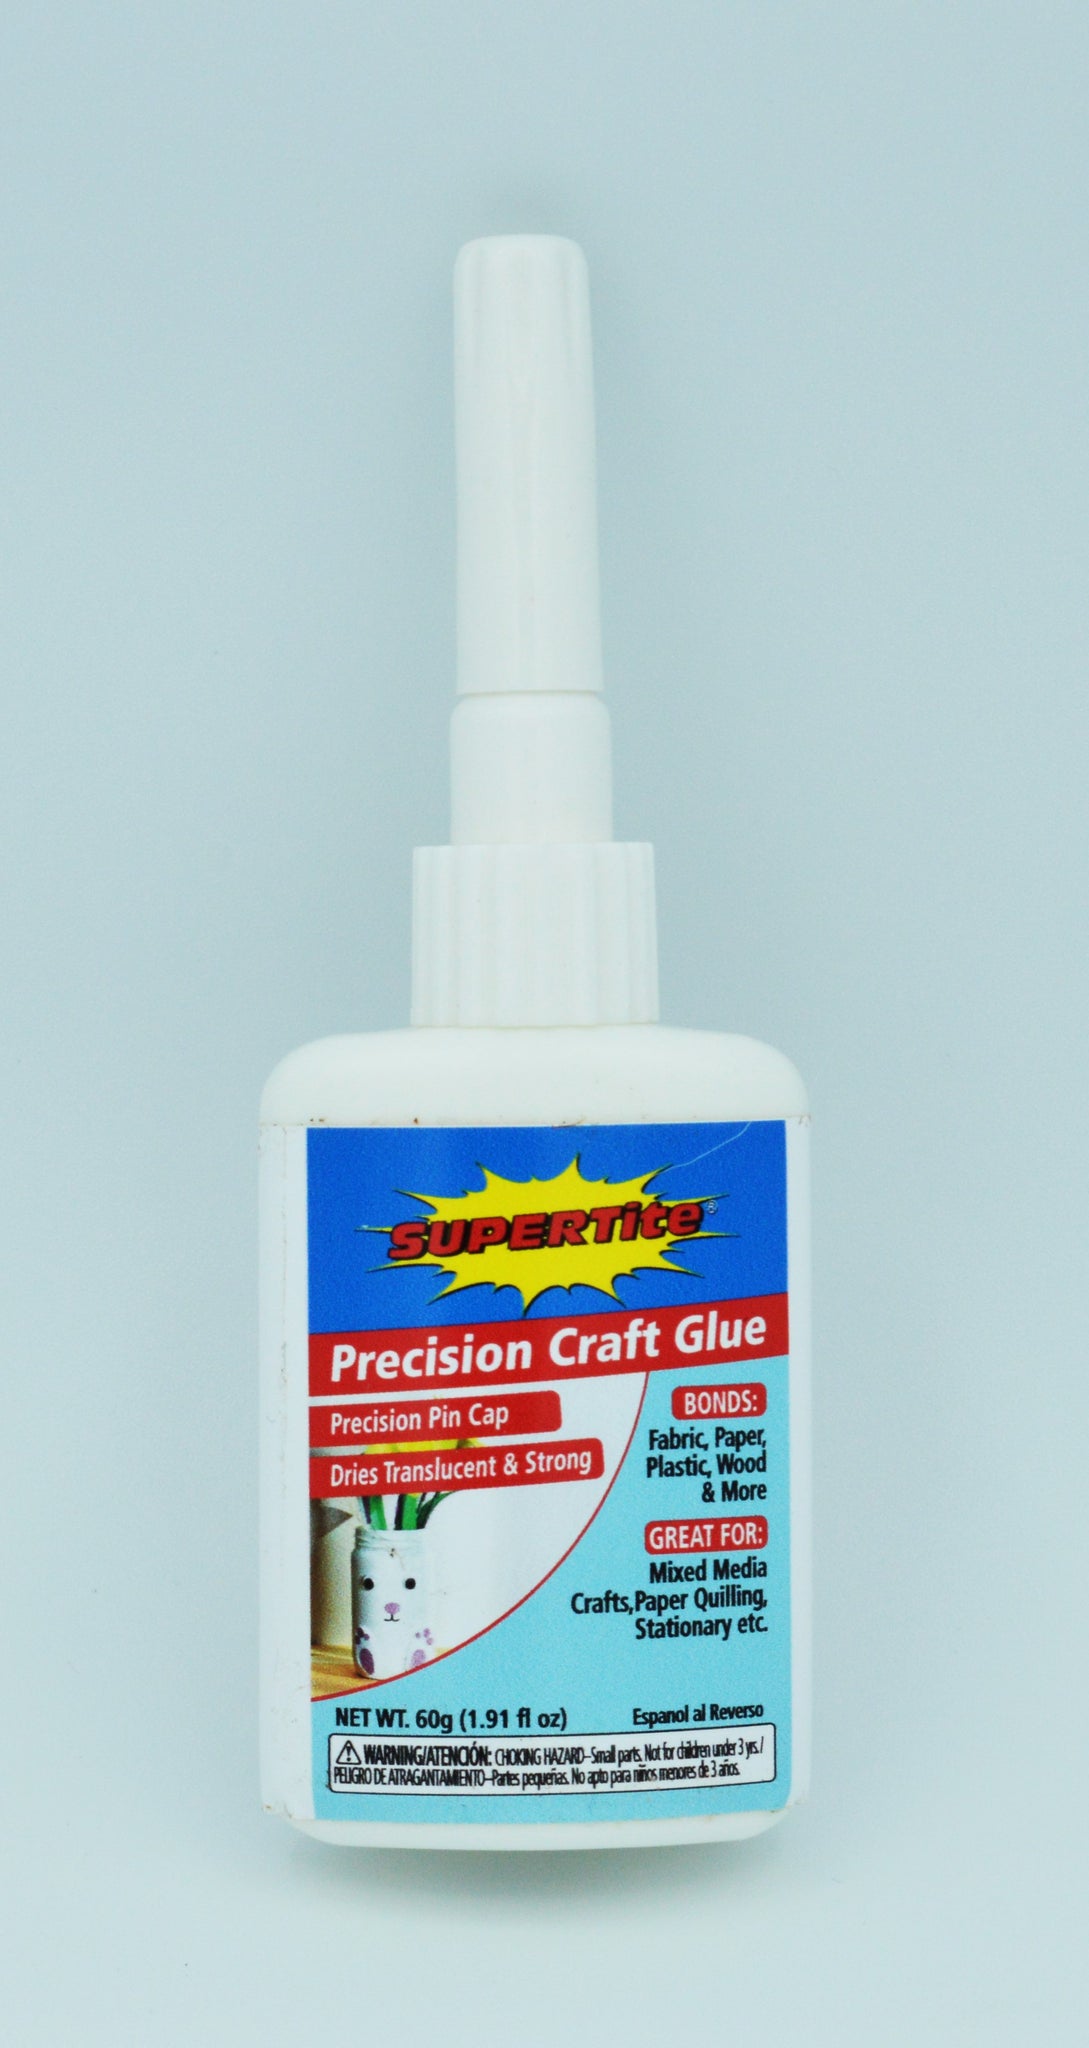 GF 637P Glue - 1 Gallon – Gluefast